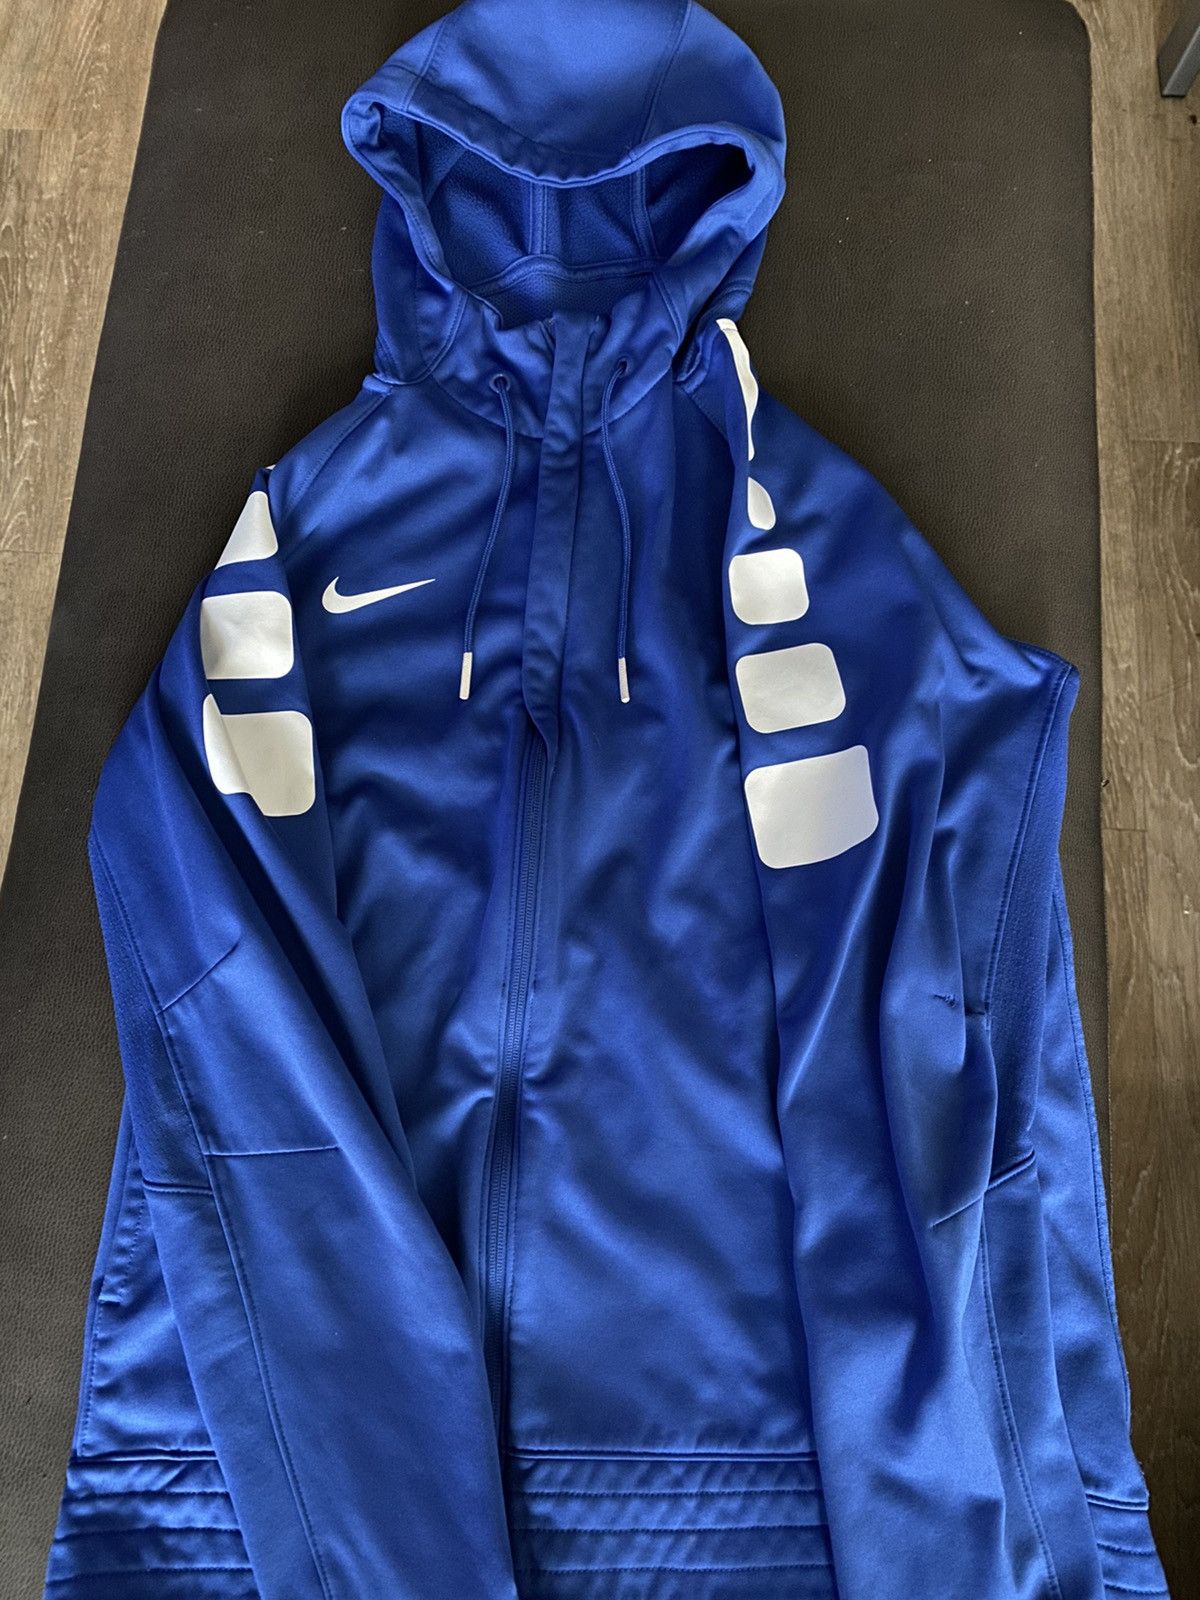 Nike Nike Elite Jacket Size US M / EU 48-50 / 2 - 1 Preview